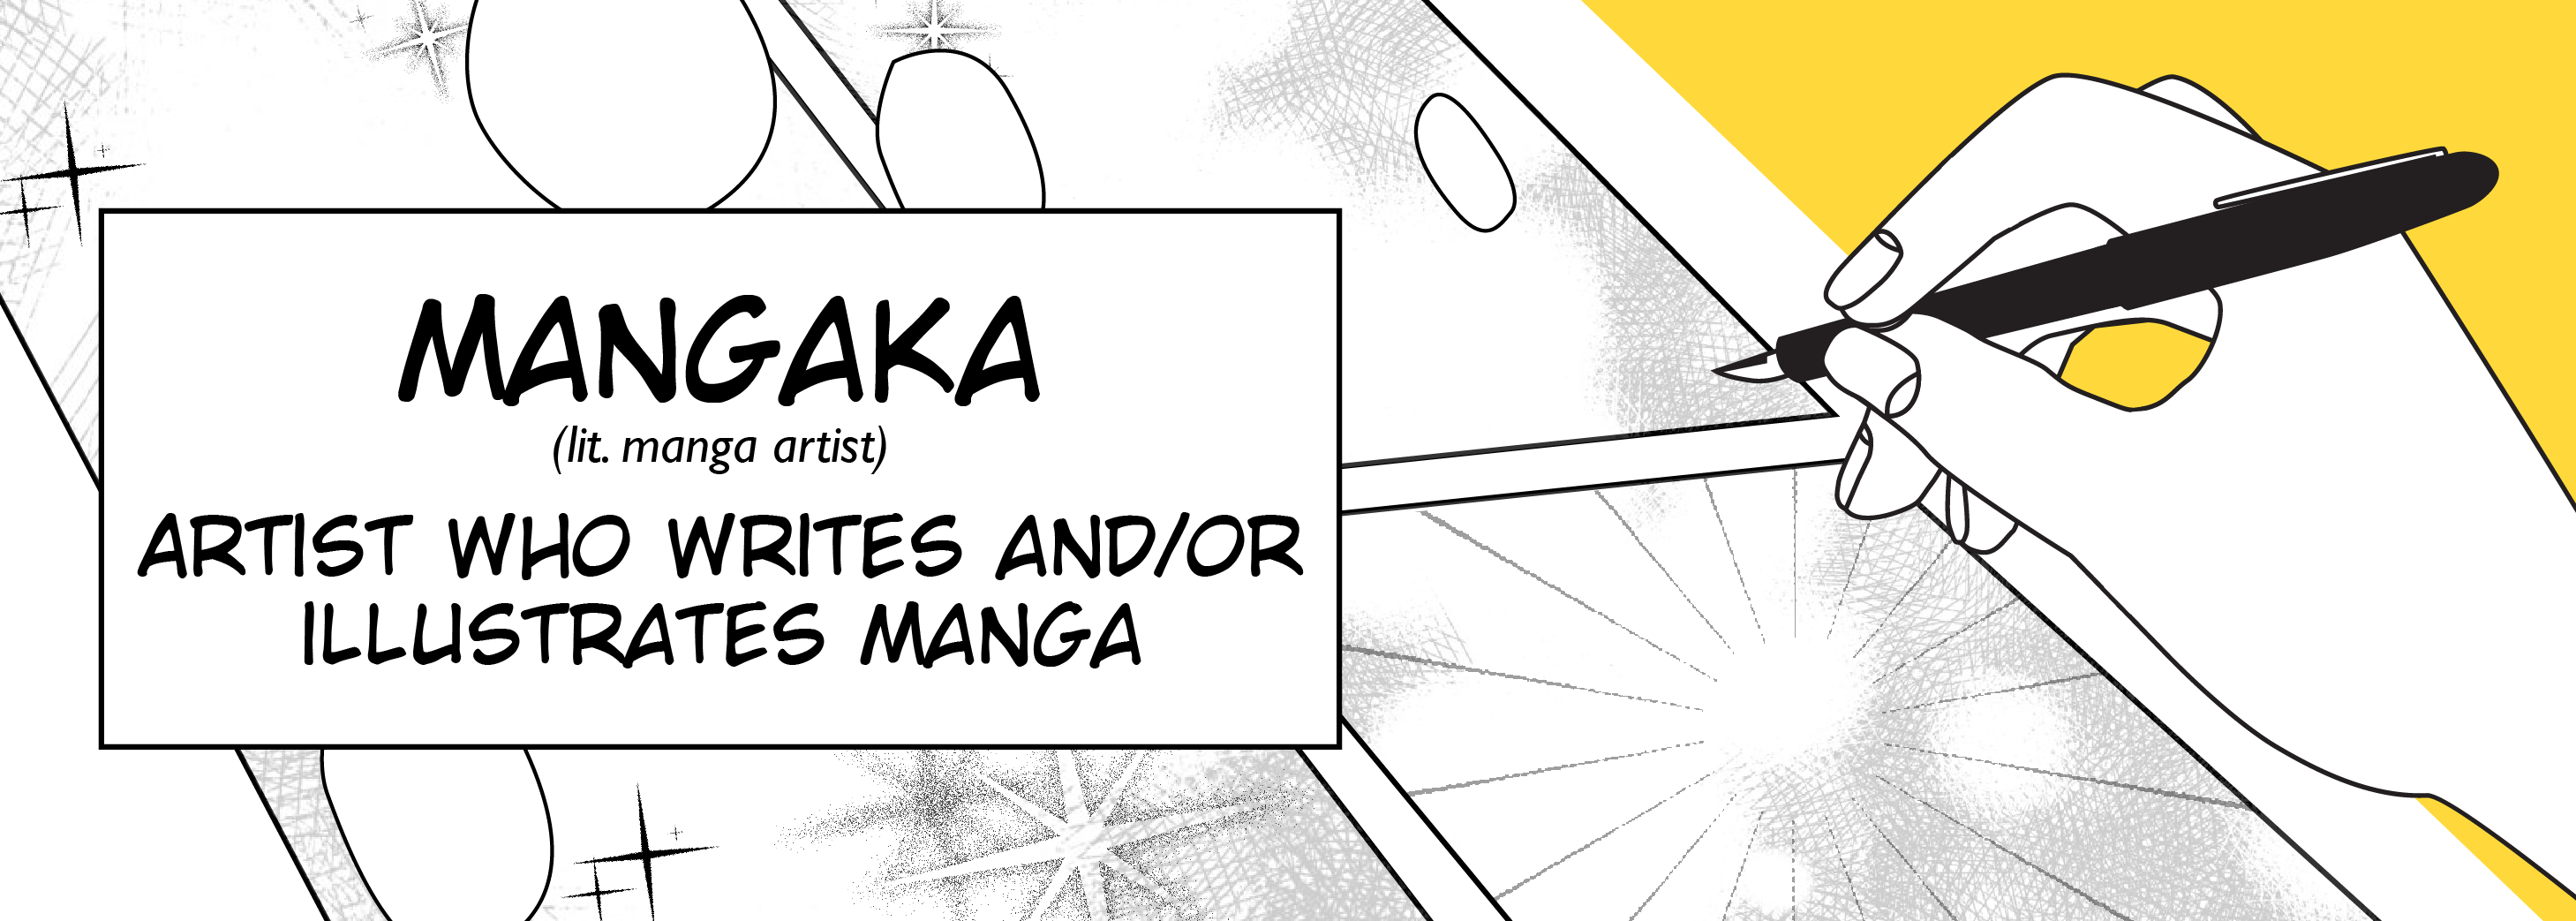 Definition of Mangaka. Mangaka literally means manga artist, an artist who writes and/or illustrates manga.